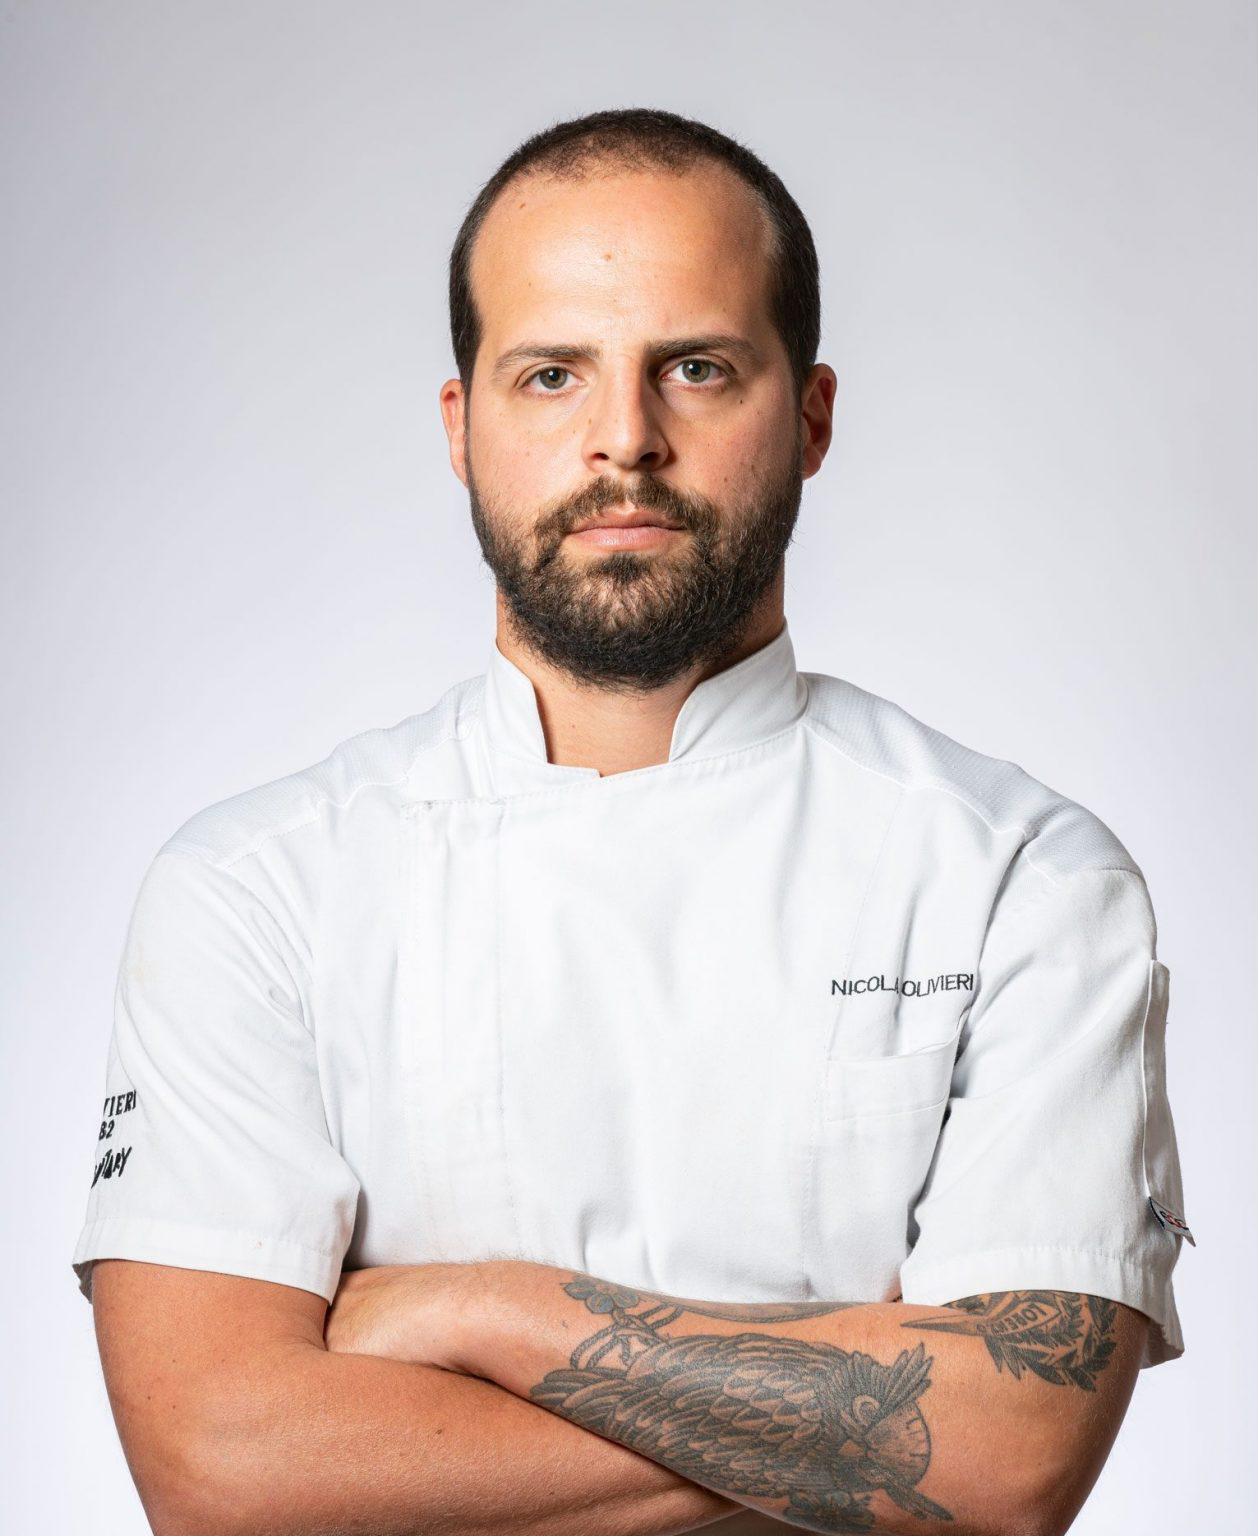 A professional portrait of Nicola Olivieri in his chef's uniform.